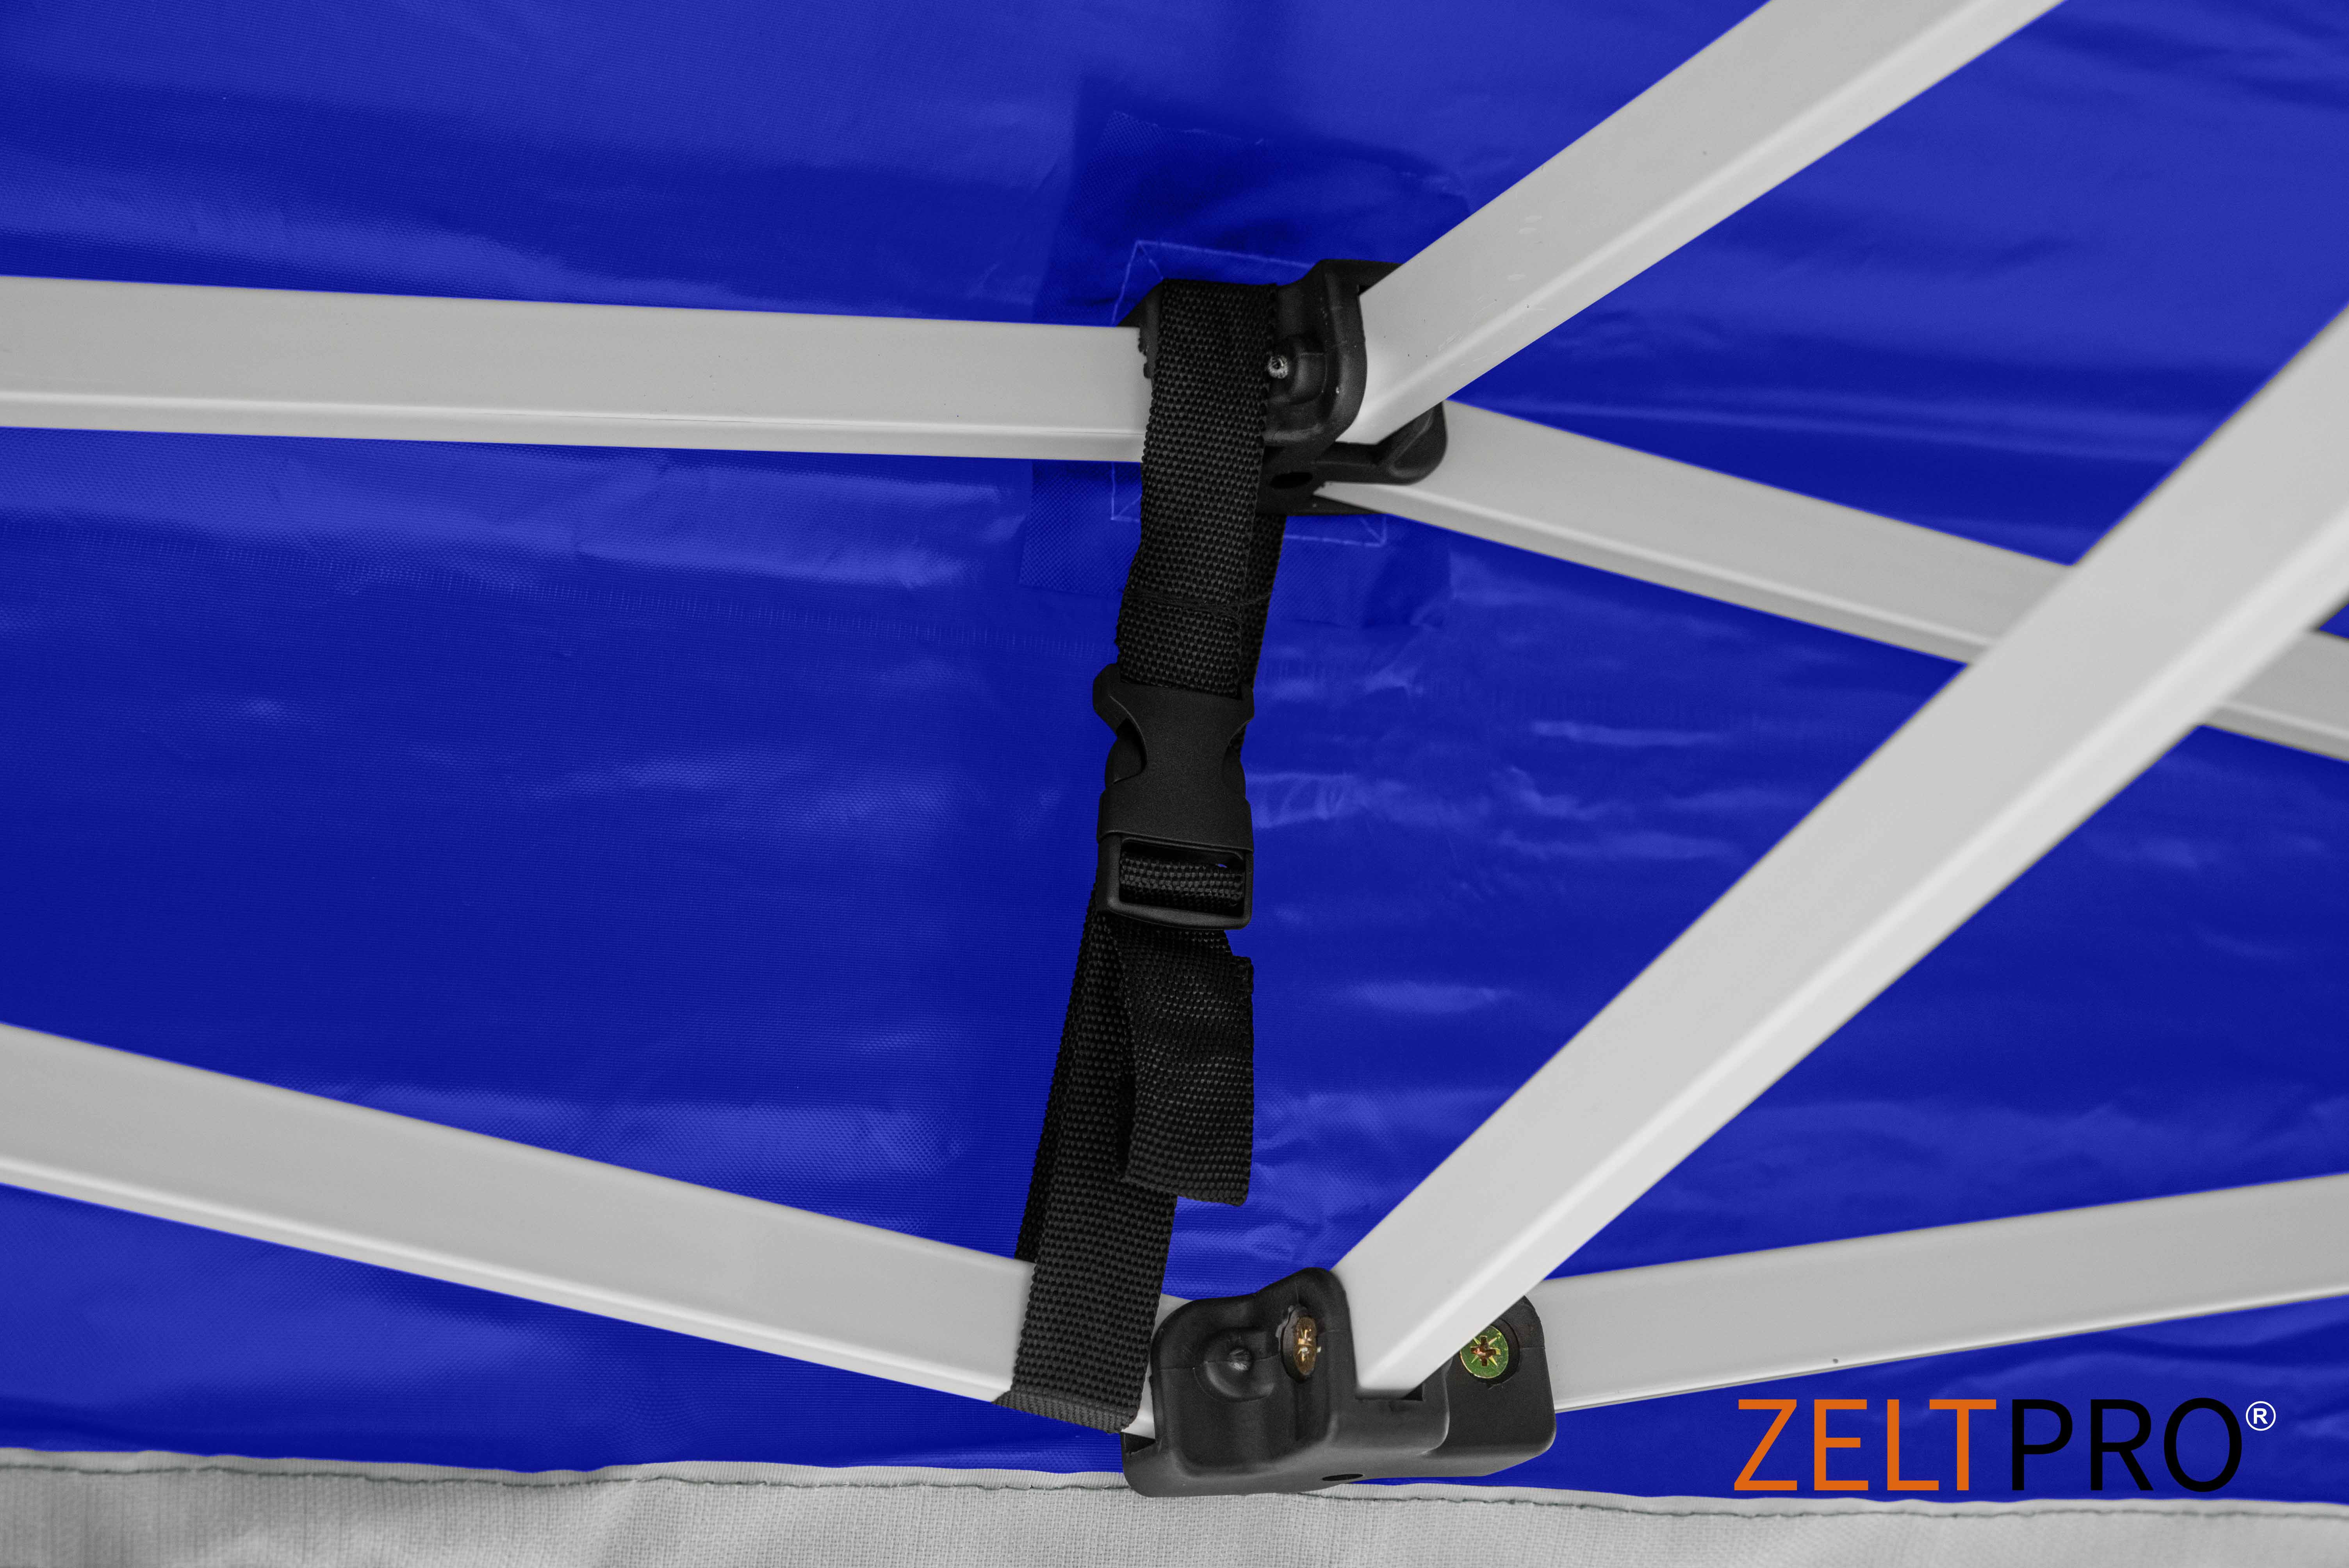 Pop-up telk 3x6 sinine Zeltpro PROFRAME